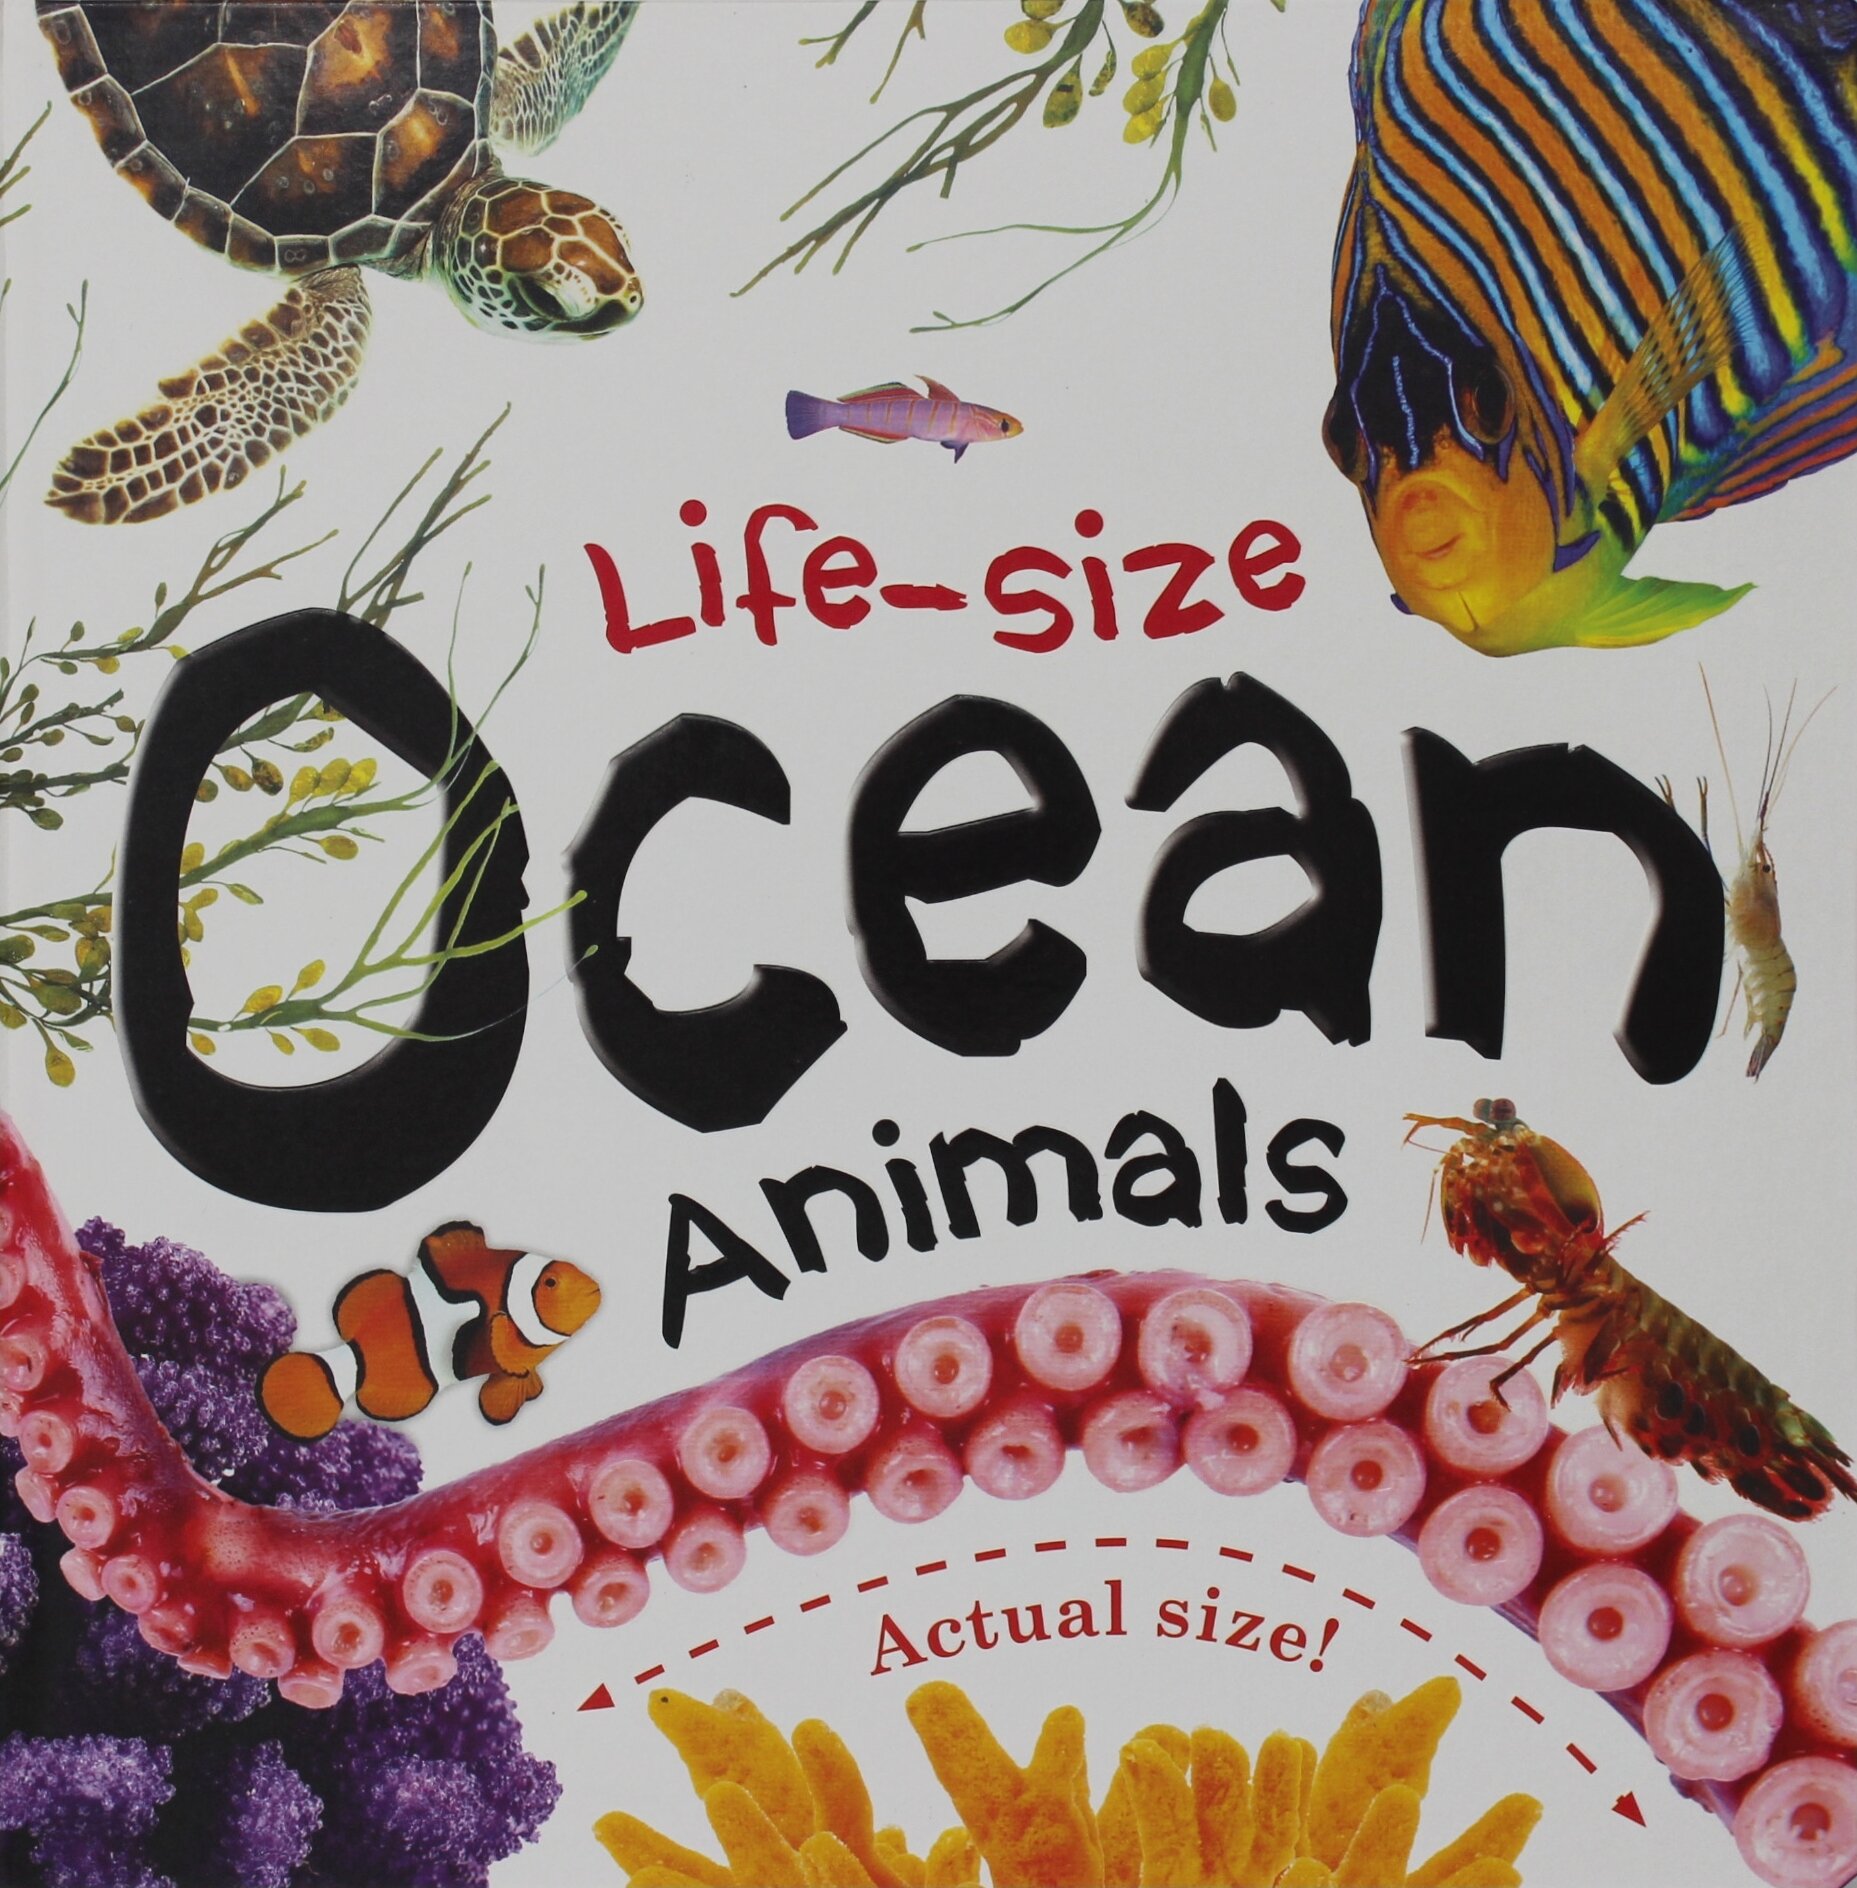 Life-size: Ocean Animals